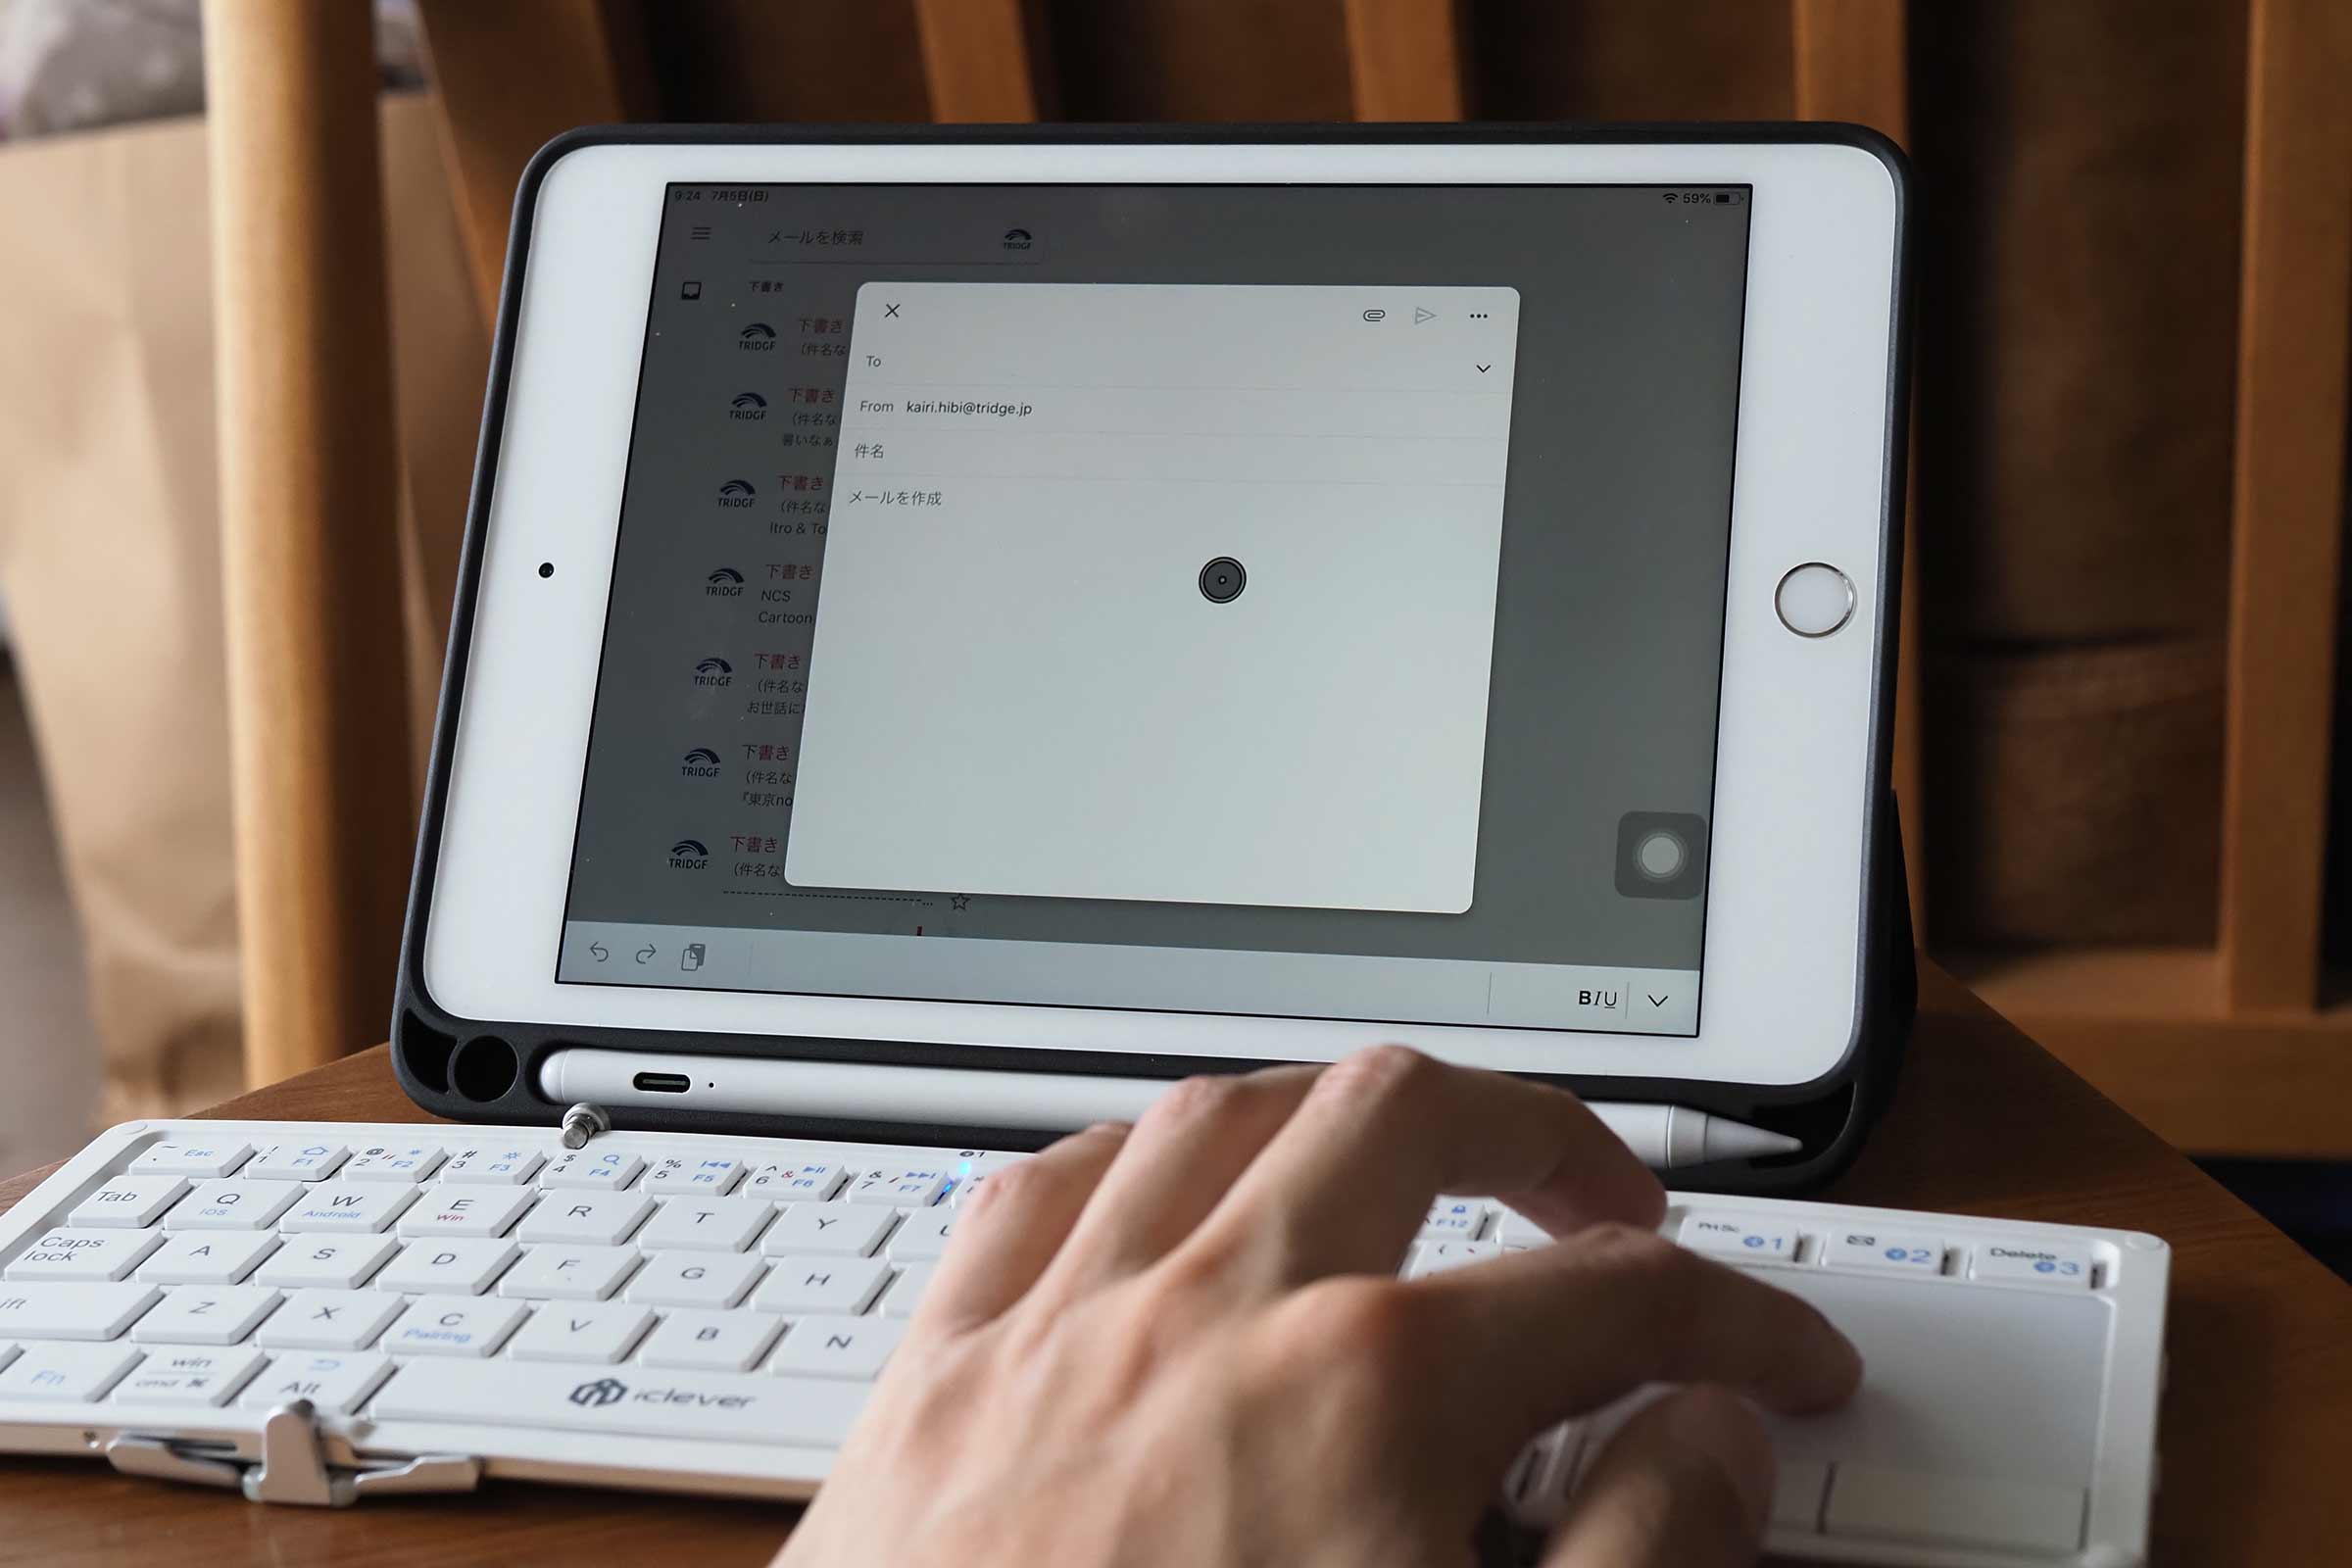 iclever,Bluetoothキーボード,iPad,iPad mini,コンパクト,薄い,安い,タッチパッド,軽い,カーソル